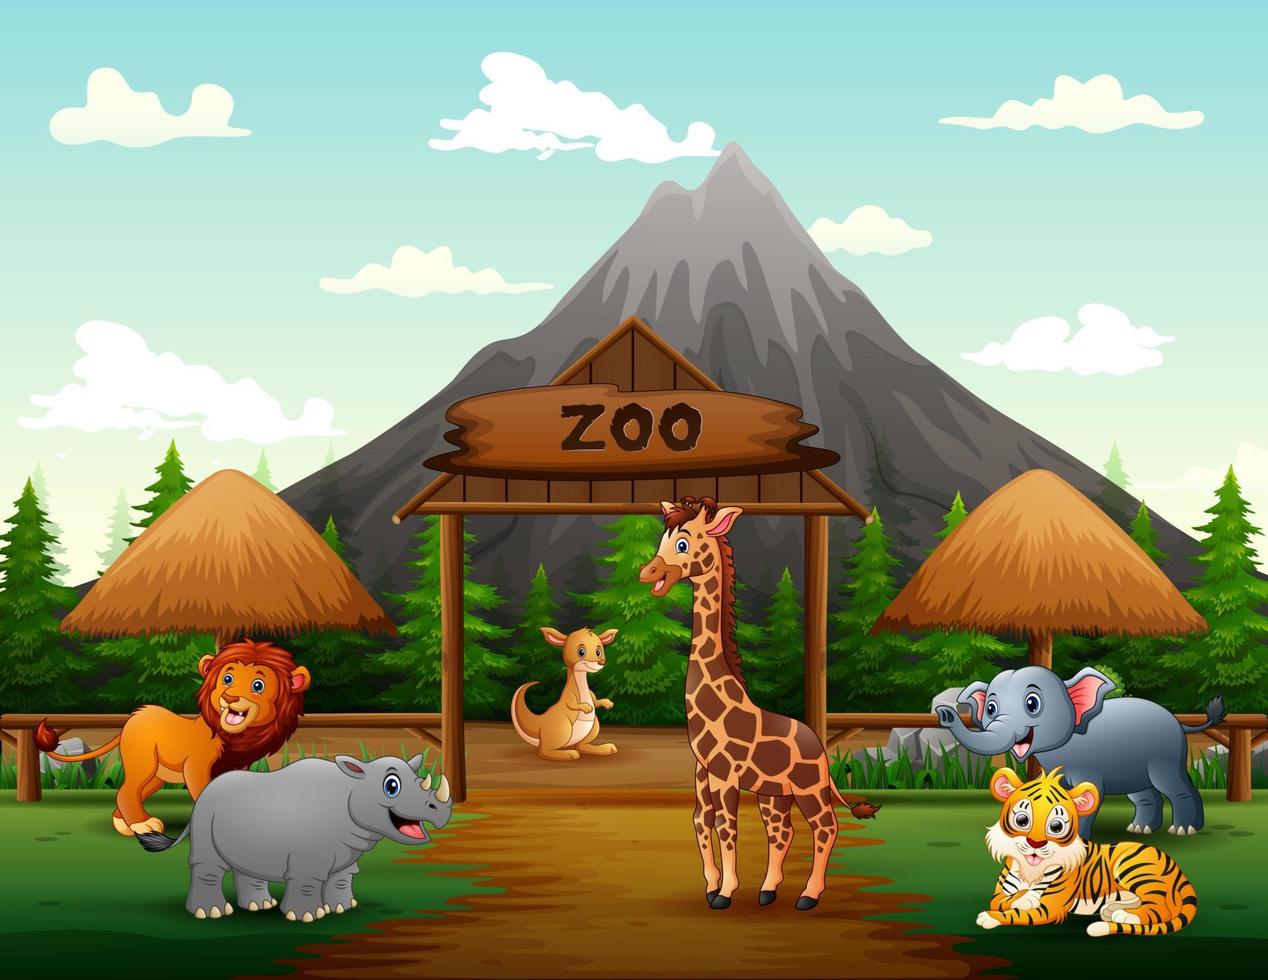 Zoo entrance gates cartoon with safari animals illustration vector